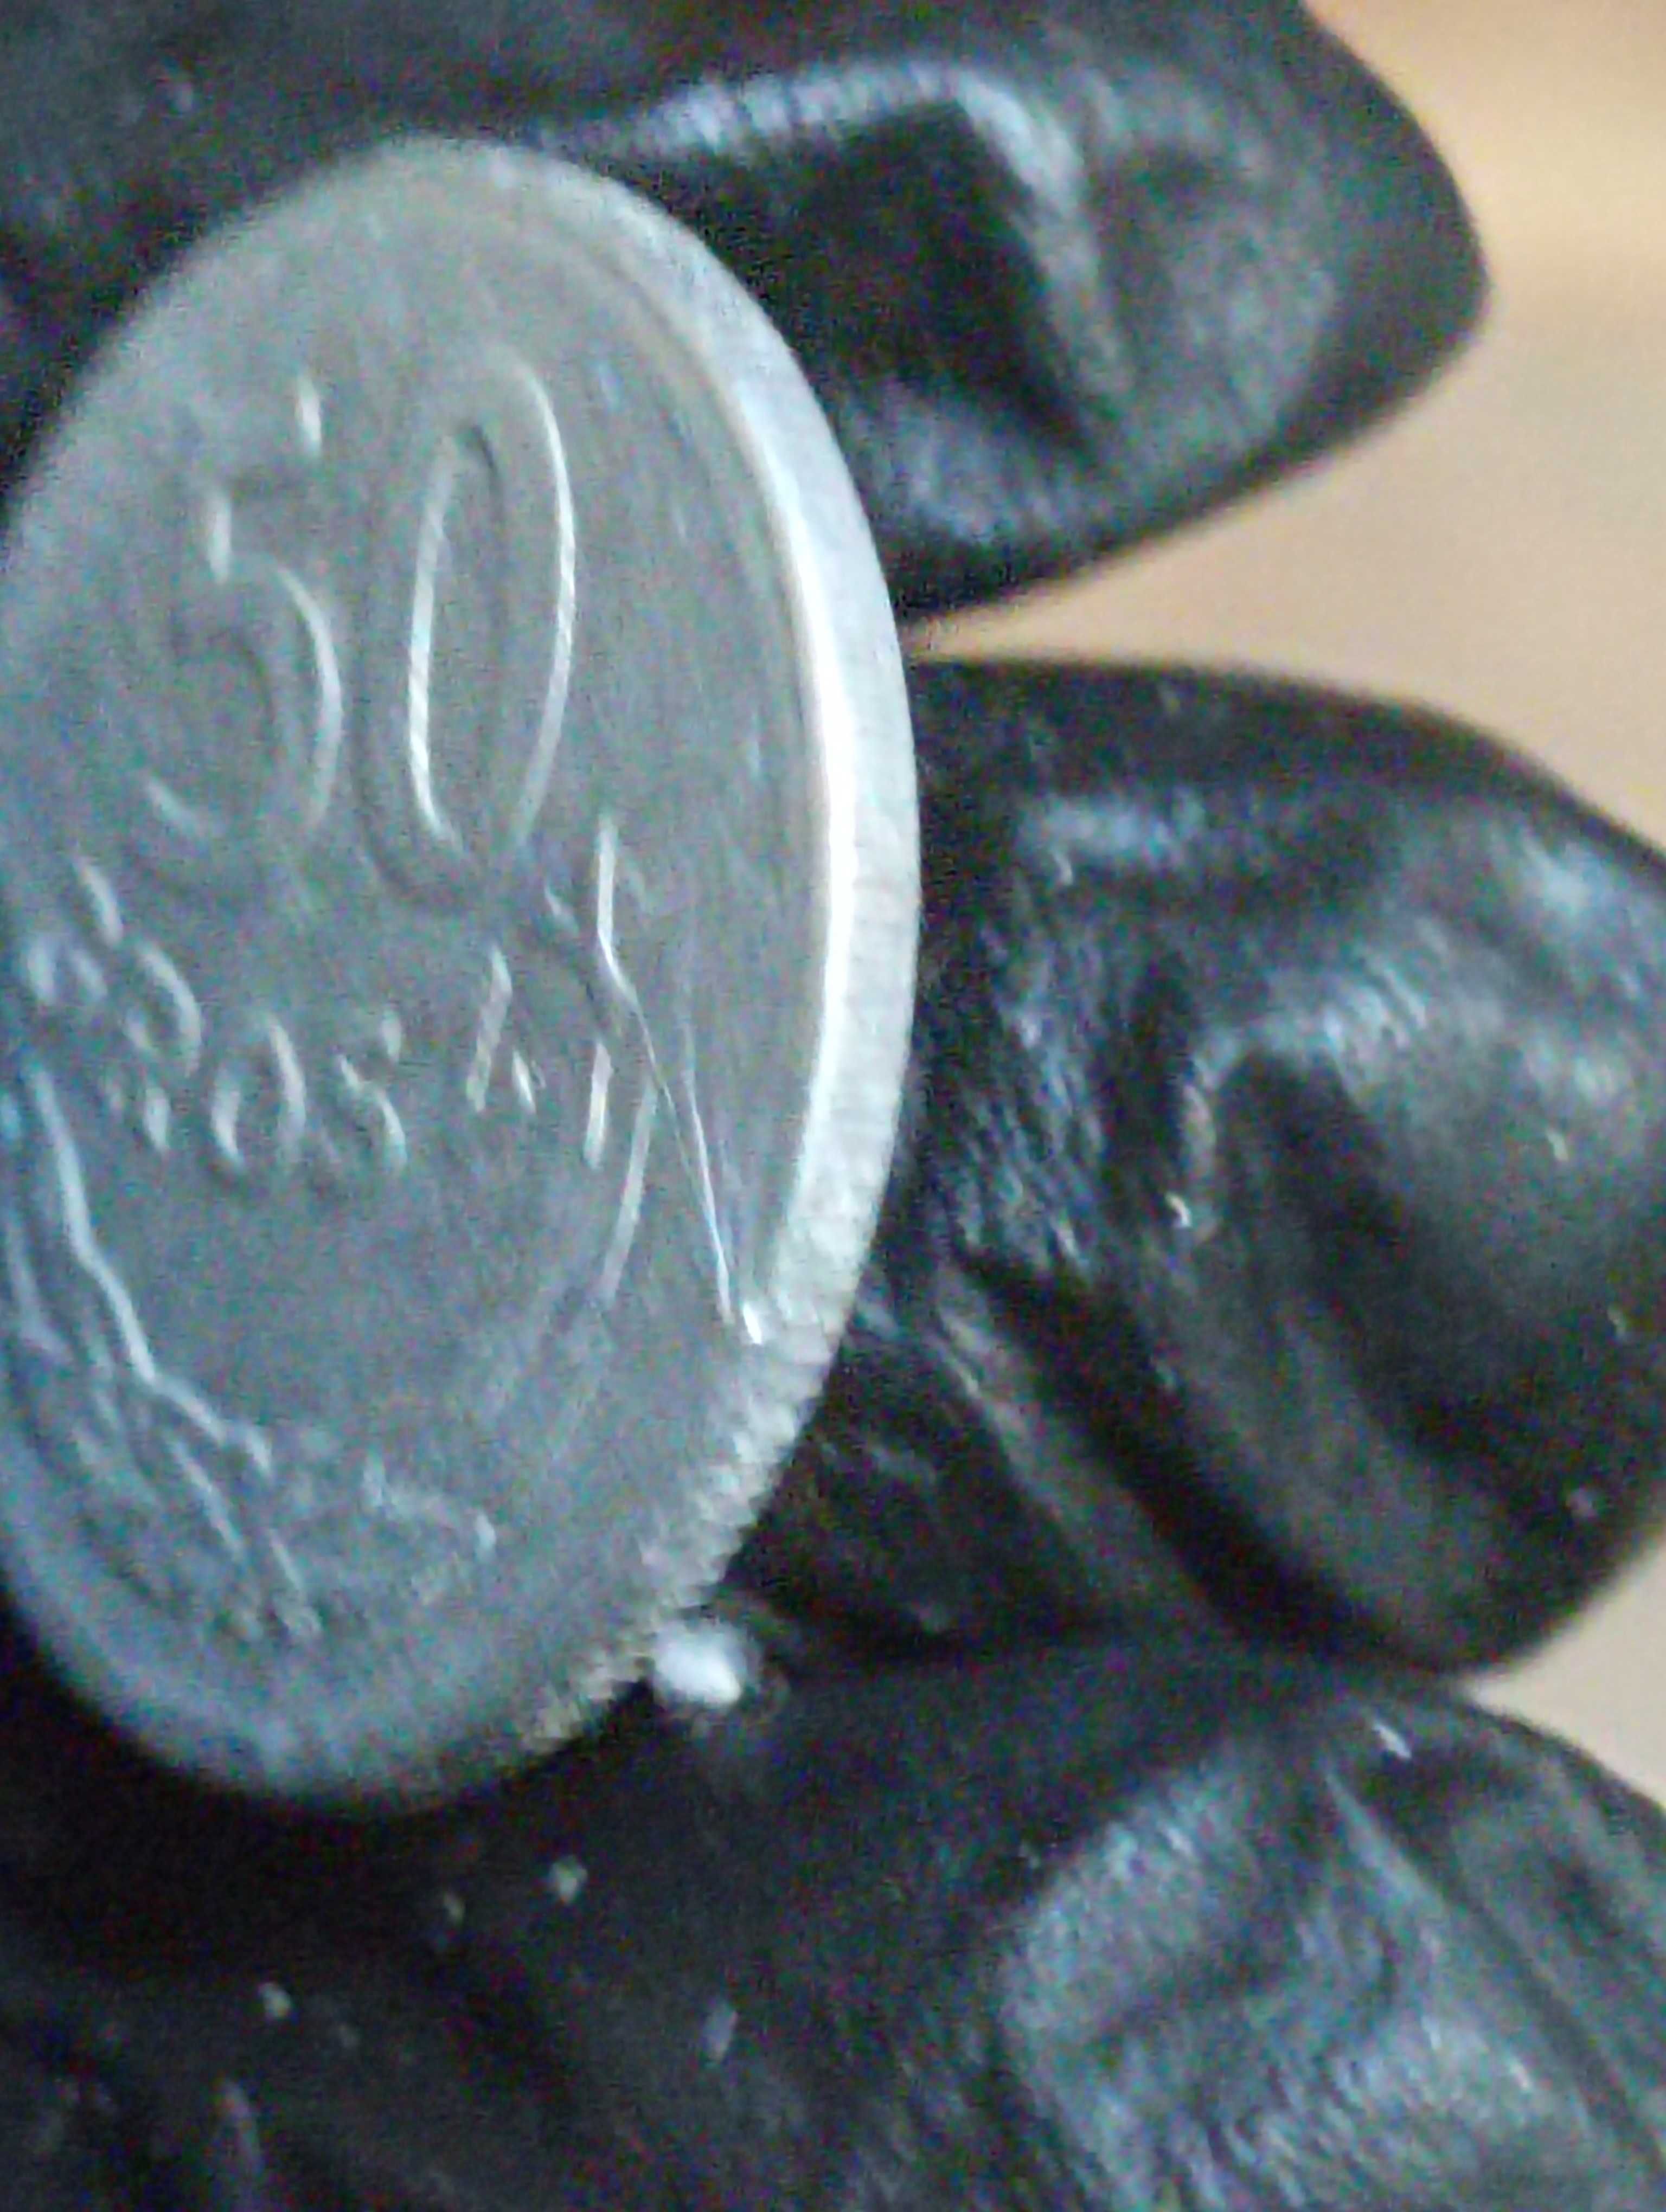 Czwarta moneta 50 groszy 1965 rok